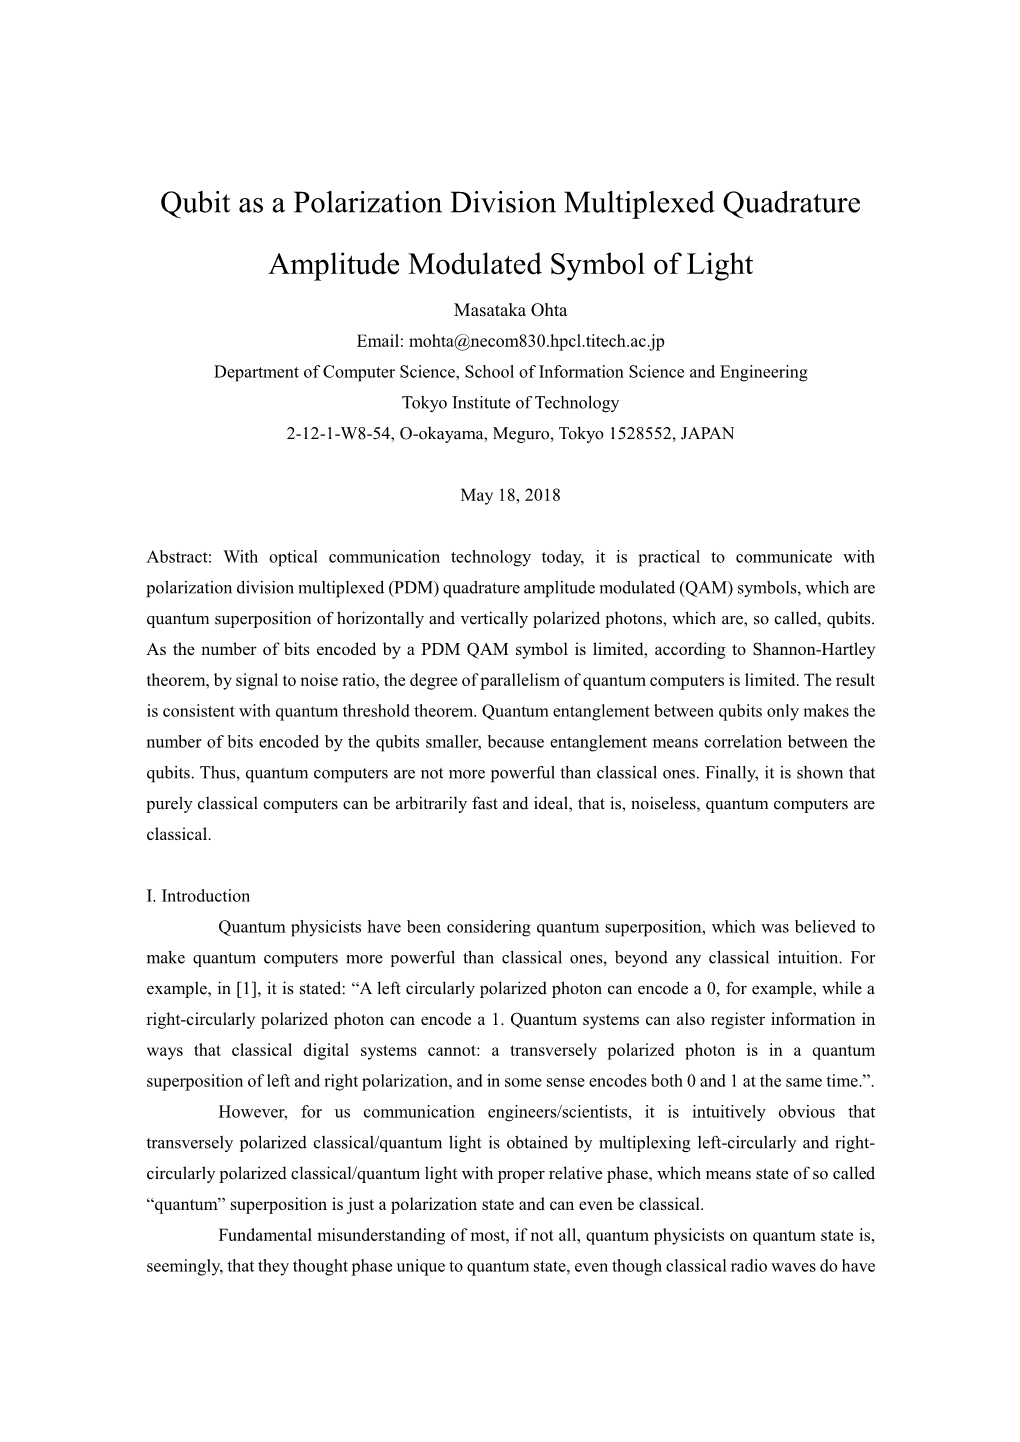 Qubit As a Polarization Division Multiplexed Quadrature Amplitude Modulated Symbol of Light